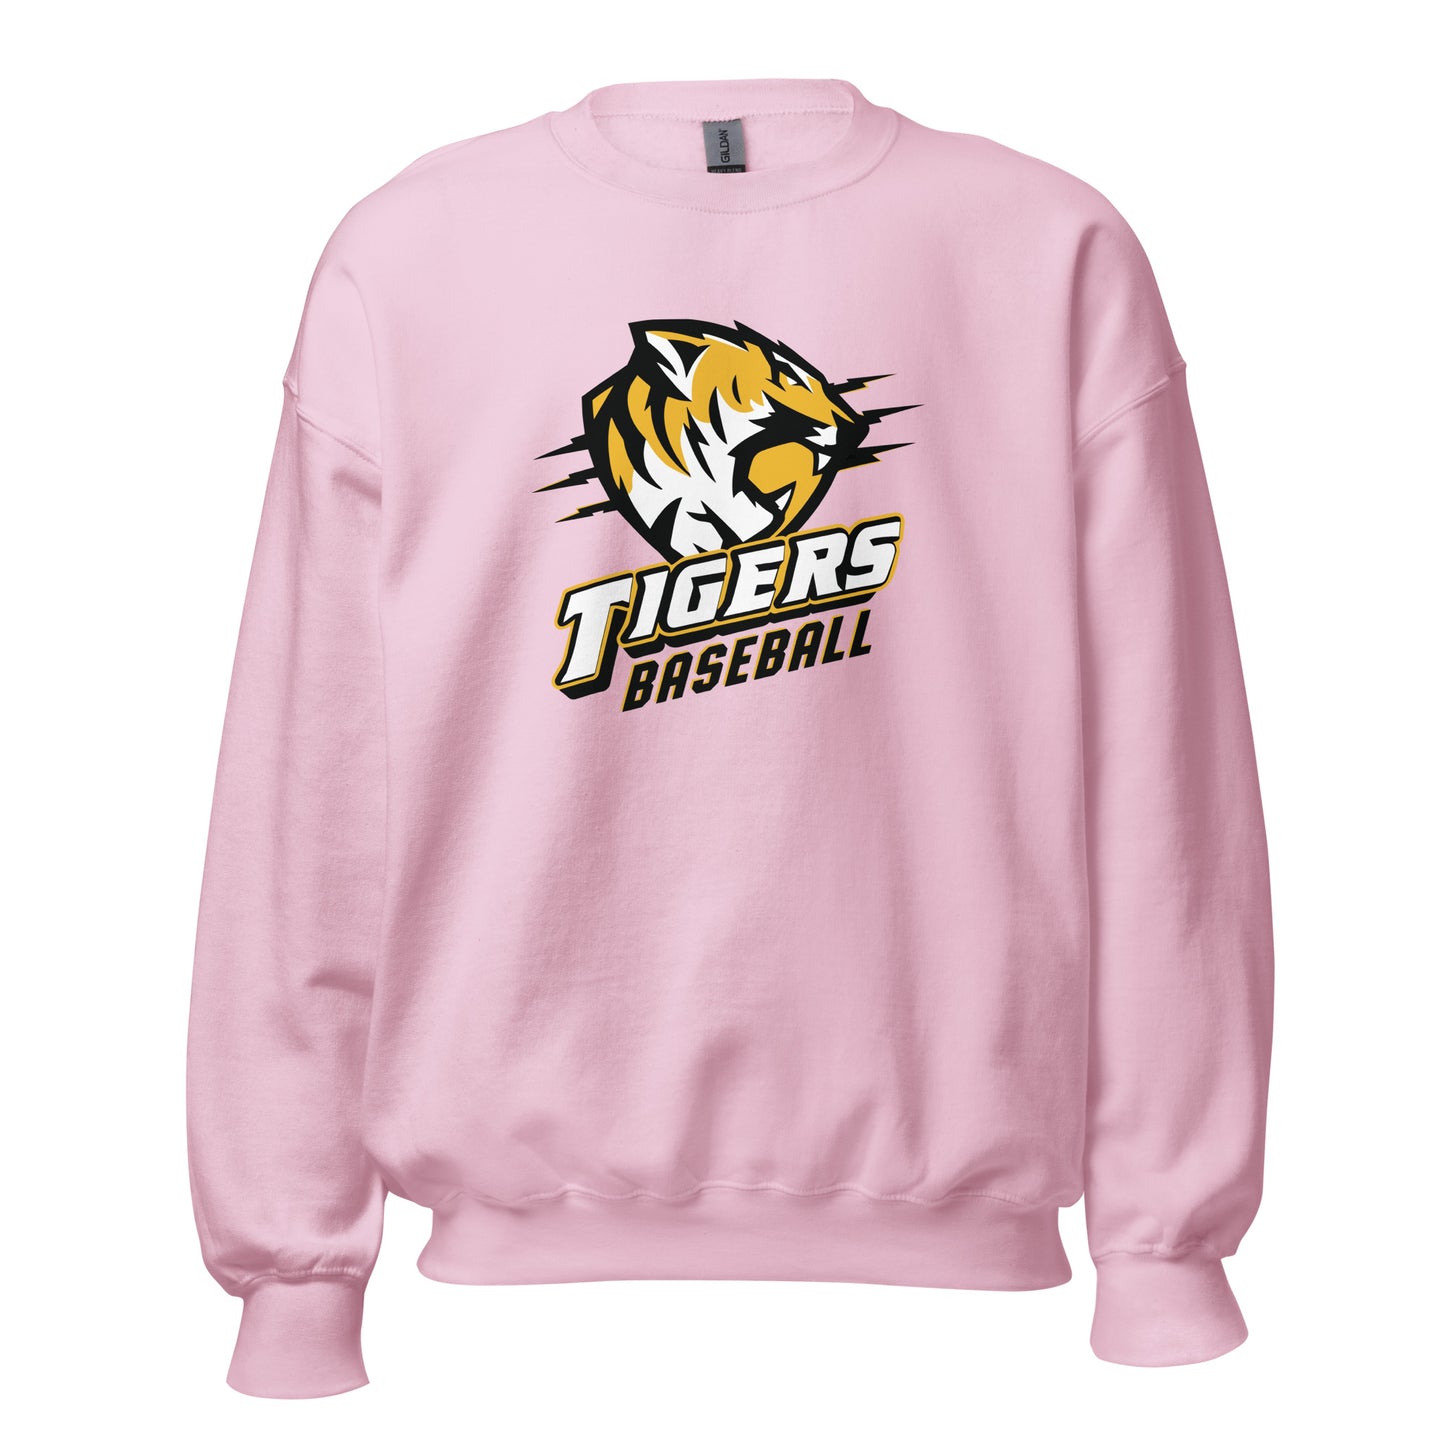 Tigers Baseball Gildan Crewneck in Light Pink